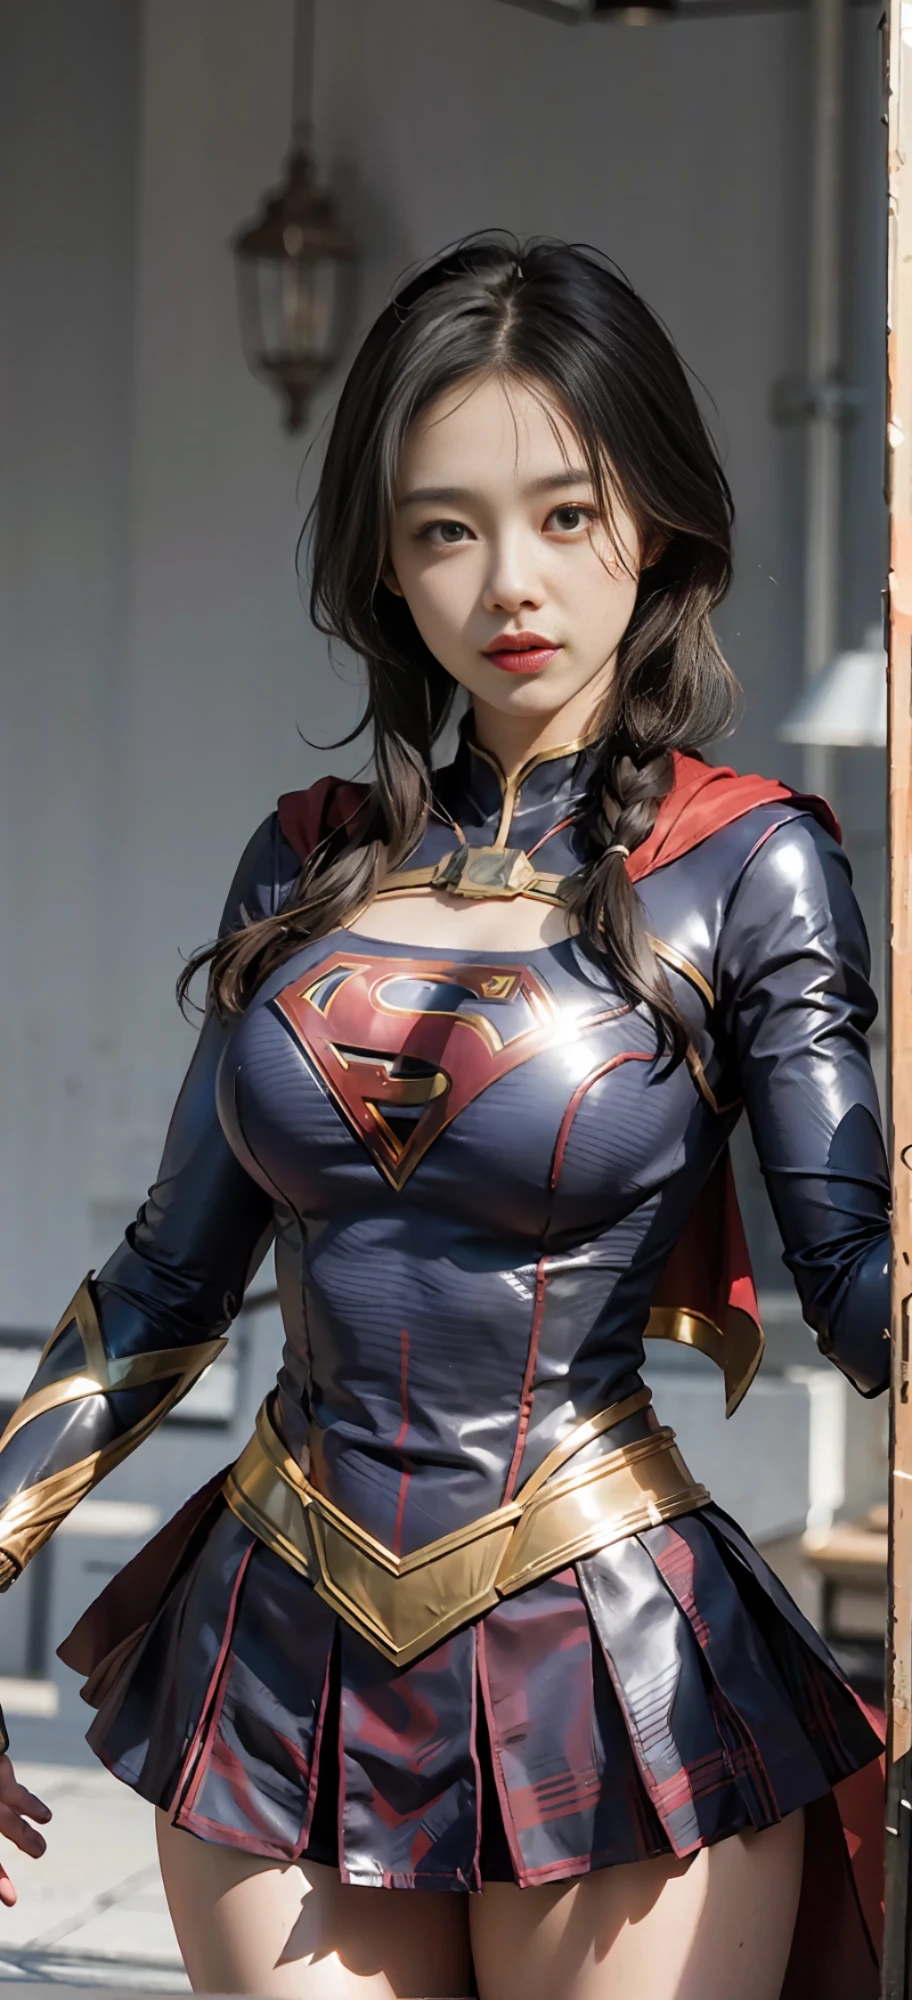 Corpo de mulher com seios grandes, Vestido de fantasia de supergirl